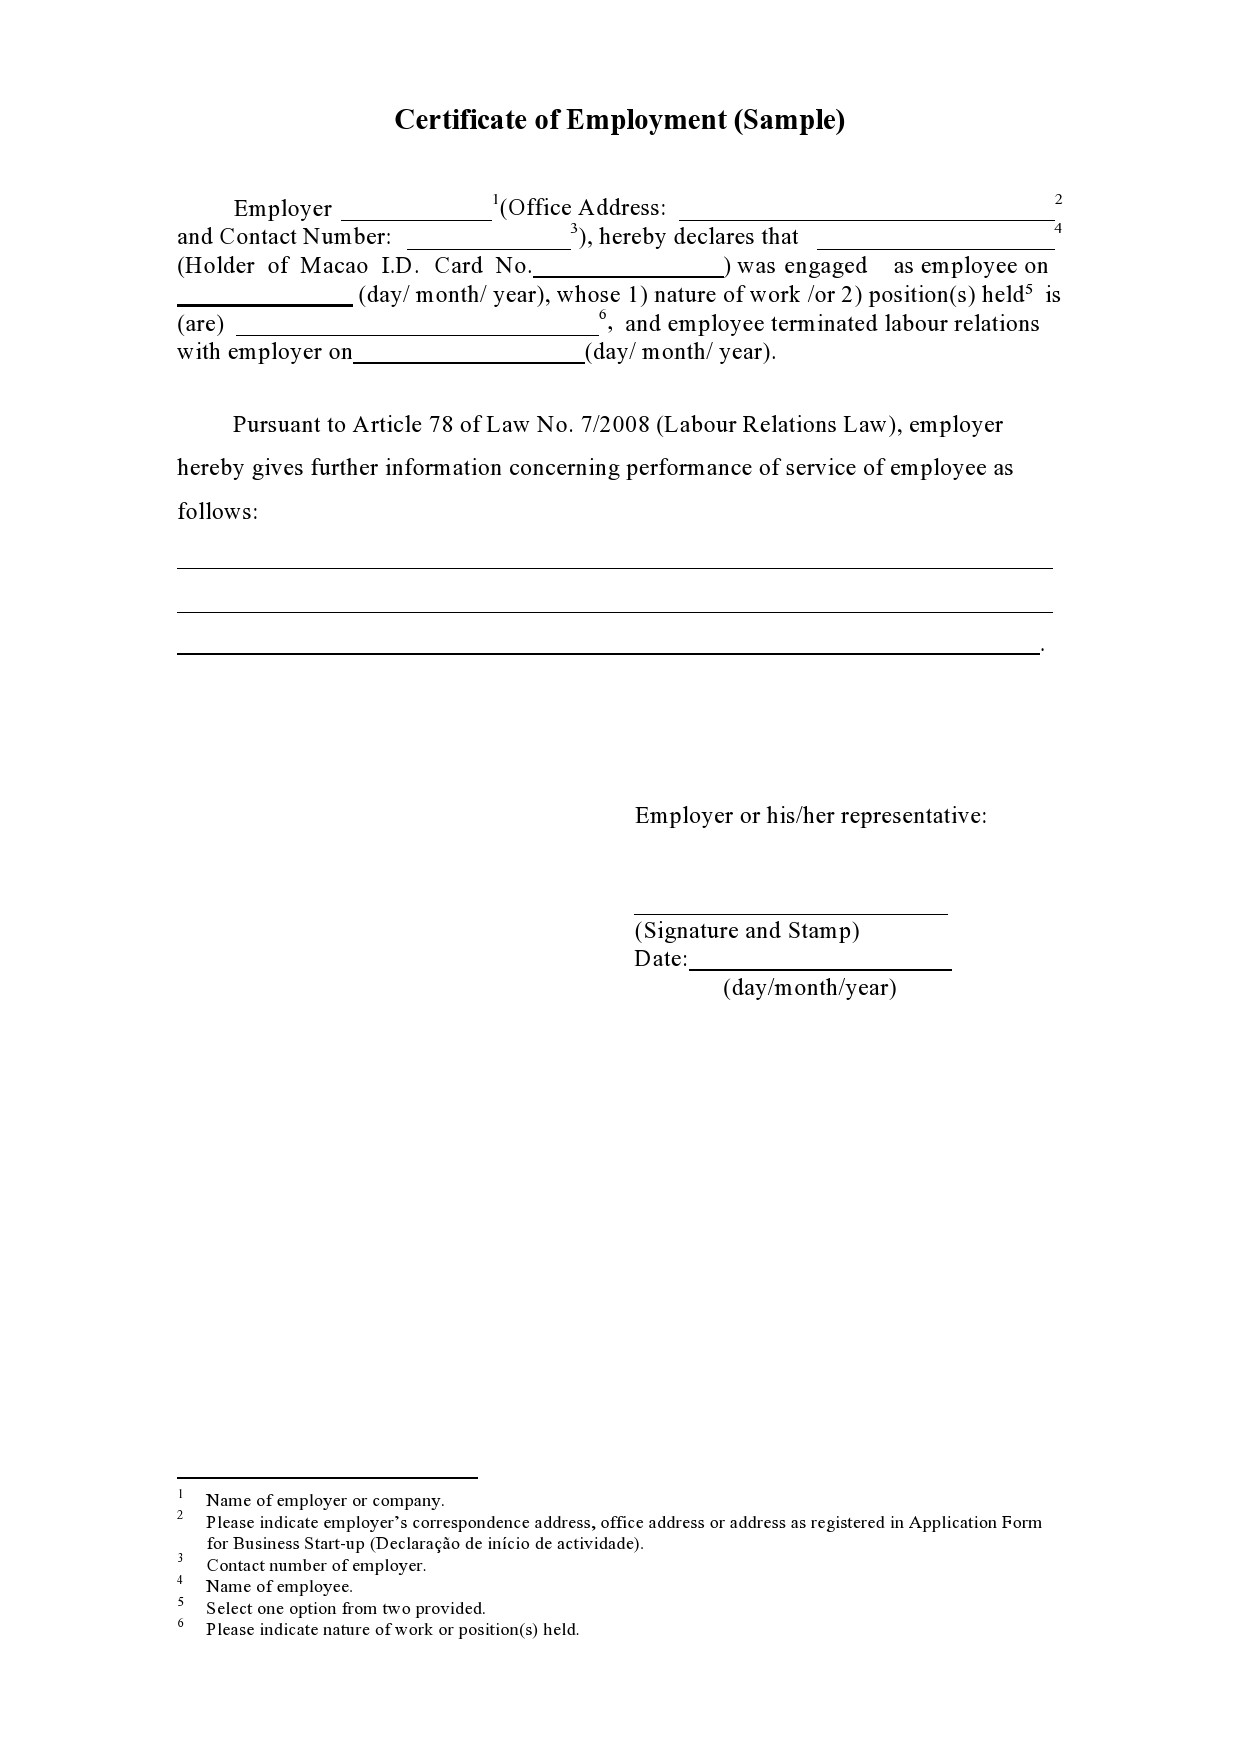 employment-format-certificate-of-employment-sample-certificates-vrogue